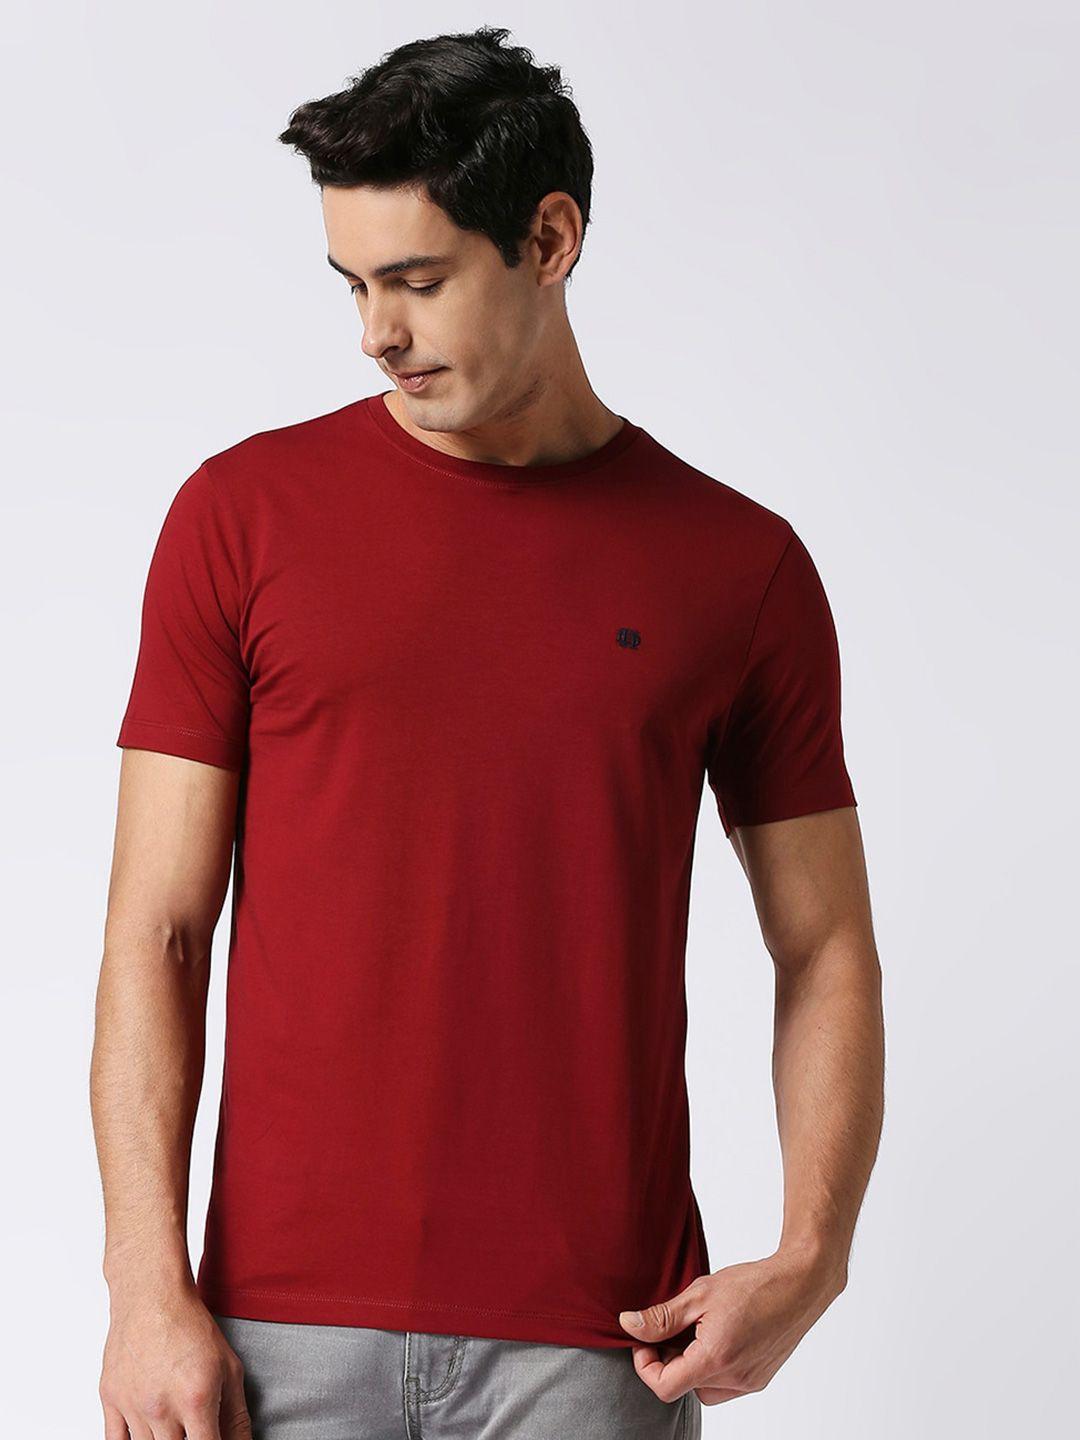 dragon hill round neck slim fit cotton t-shirt